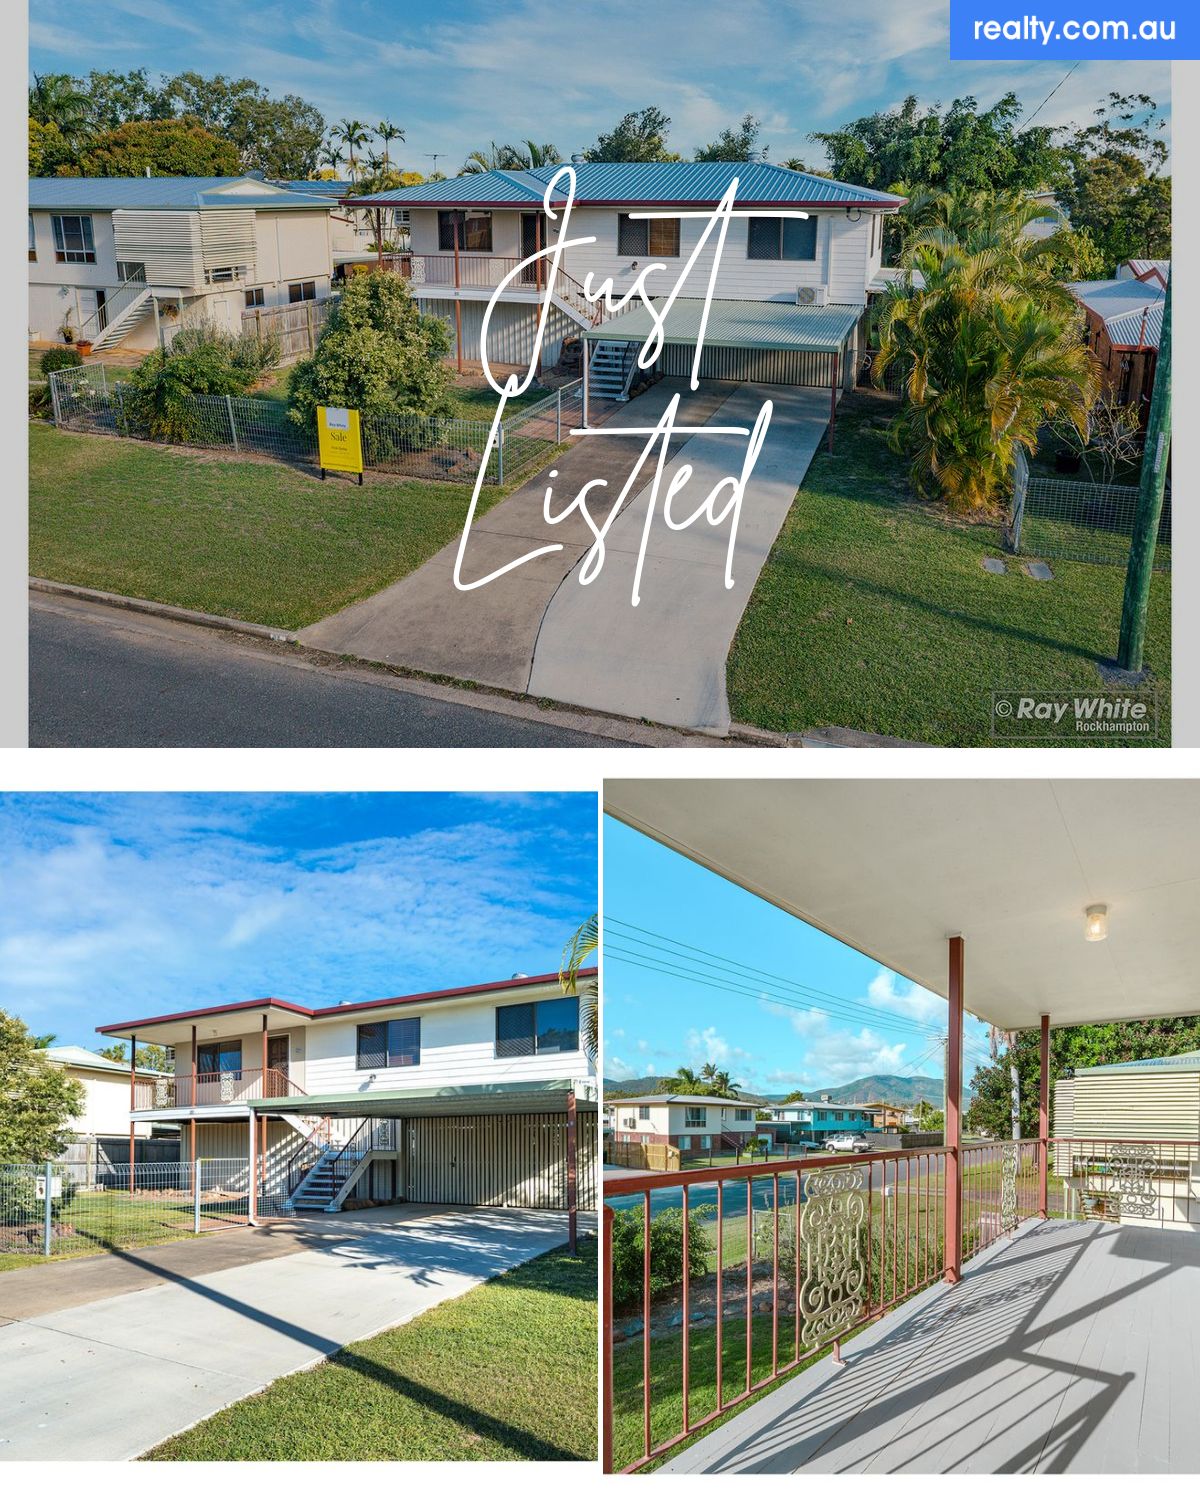 88 Stenlake Avenue, Kawana, QLD 4701 | Realty.com.au